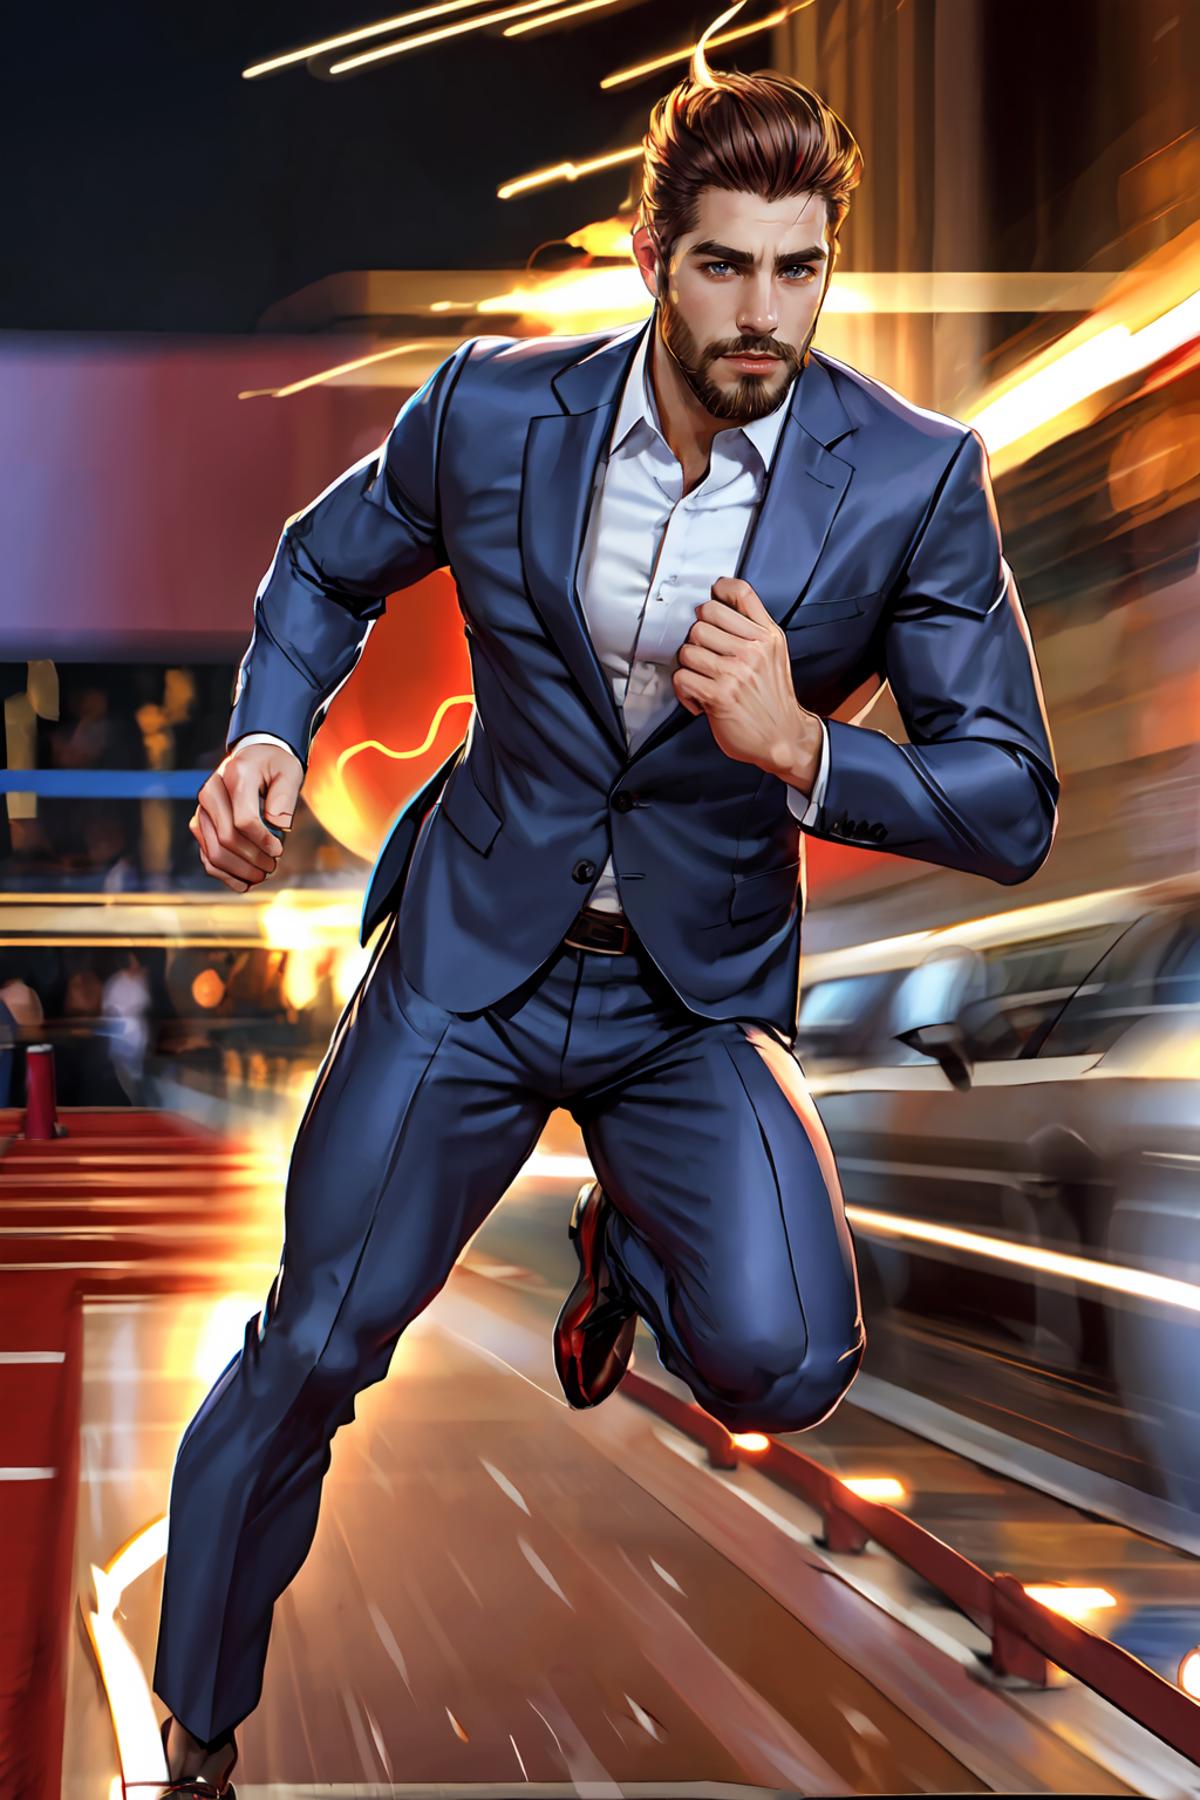 Super speed running Concept [gotta go fast] image by SecretEGGNOG